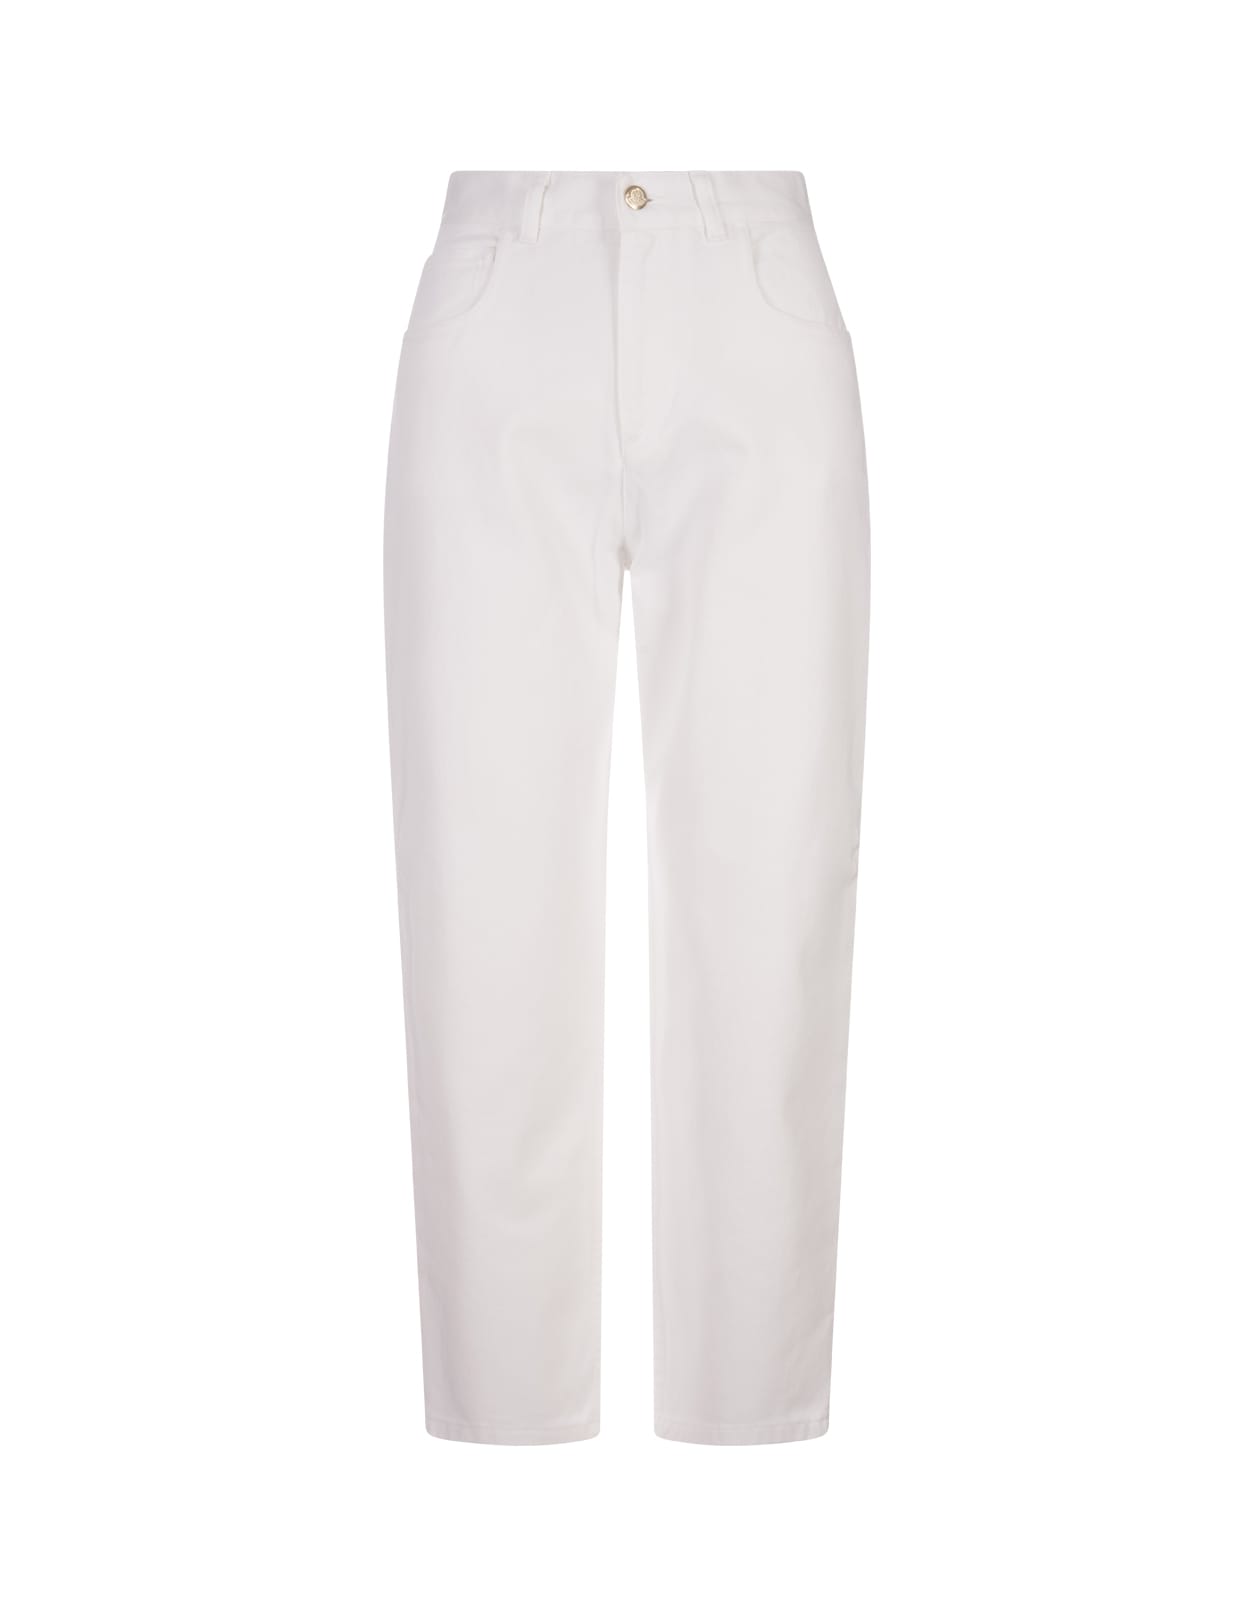 Moncler White Bull Vintage Cotton Short Jeans